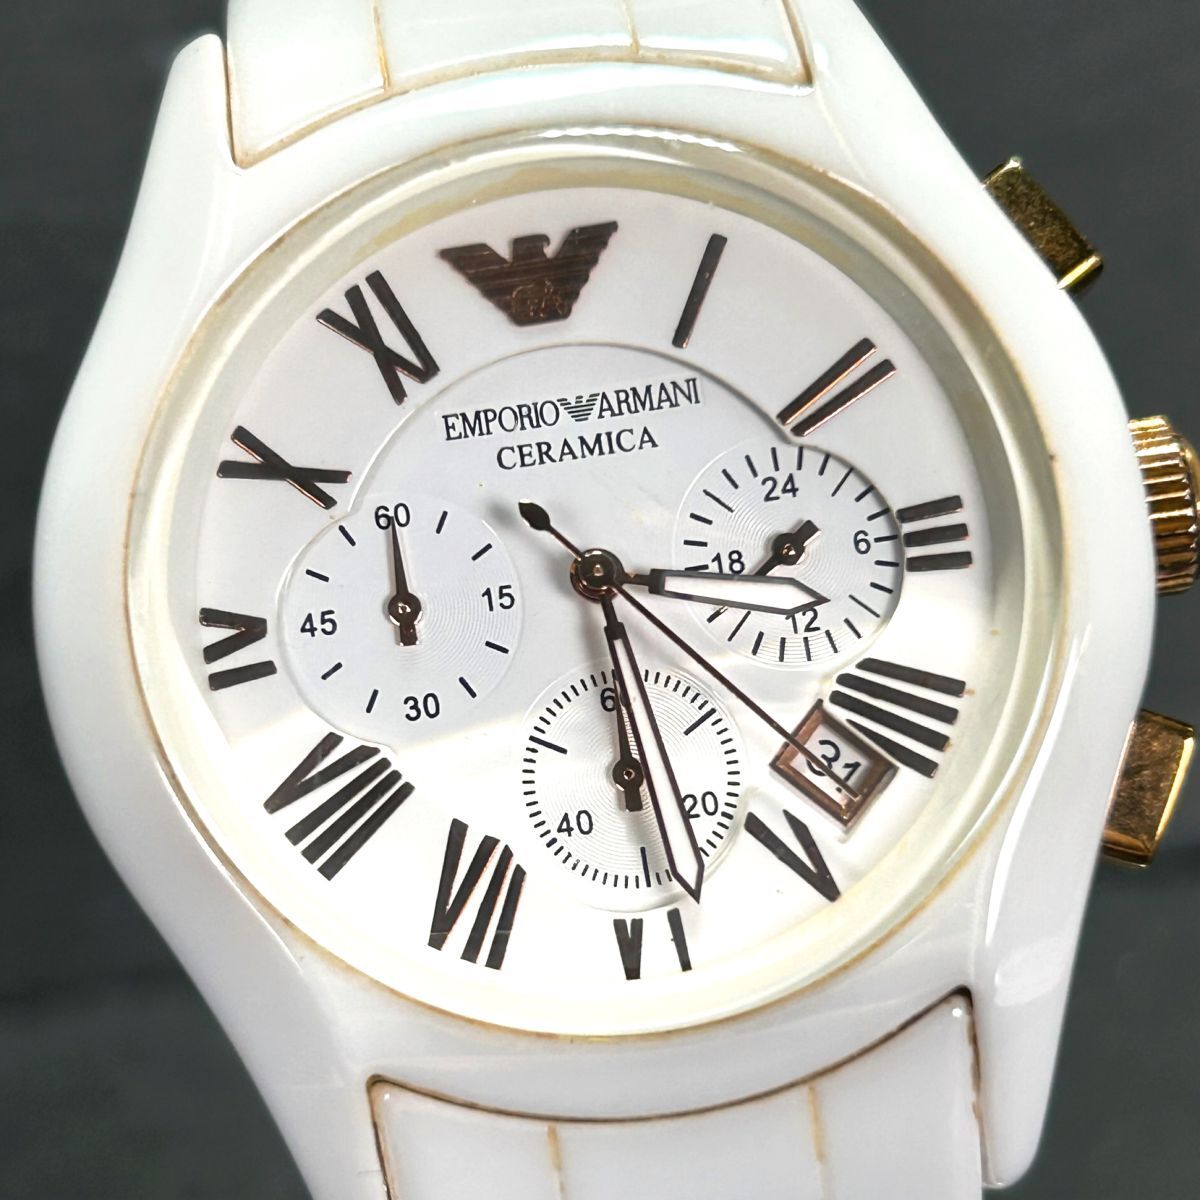 Emporio Armani エンポリオアルマーニ CERAMICA セラミカ AR-1416 腕時計 クオーツ アナログ クロノグラフ 新品電池交換済み 動作確認済みの画像1